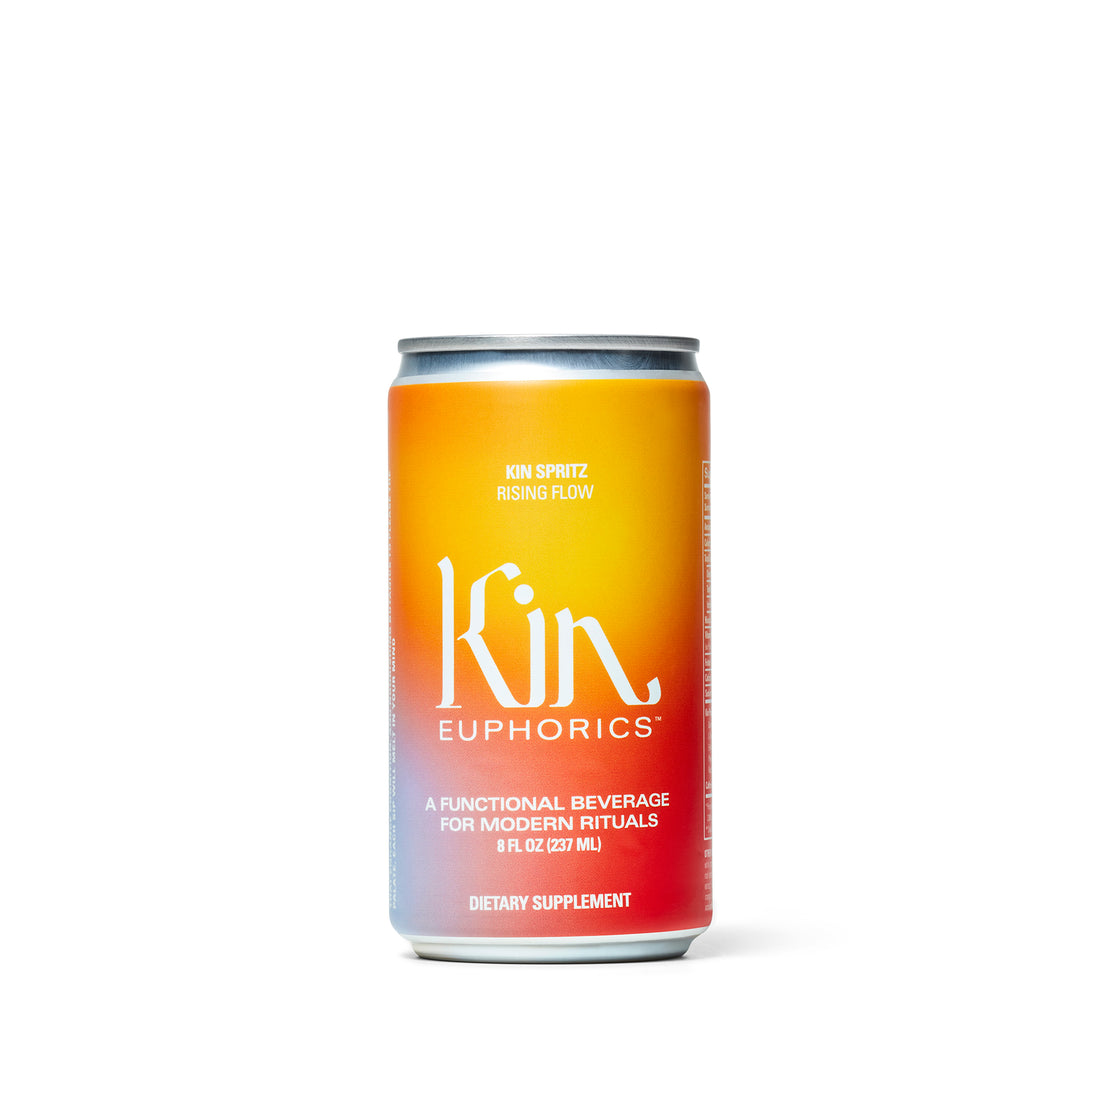 Kin Euphorics - Kin Spritz Single Can - Boisson — Brooklyn's Non-Alcoholic Spirits, Beer, Wine, and Home Bar Shop in Cobble Hill